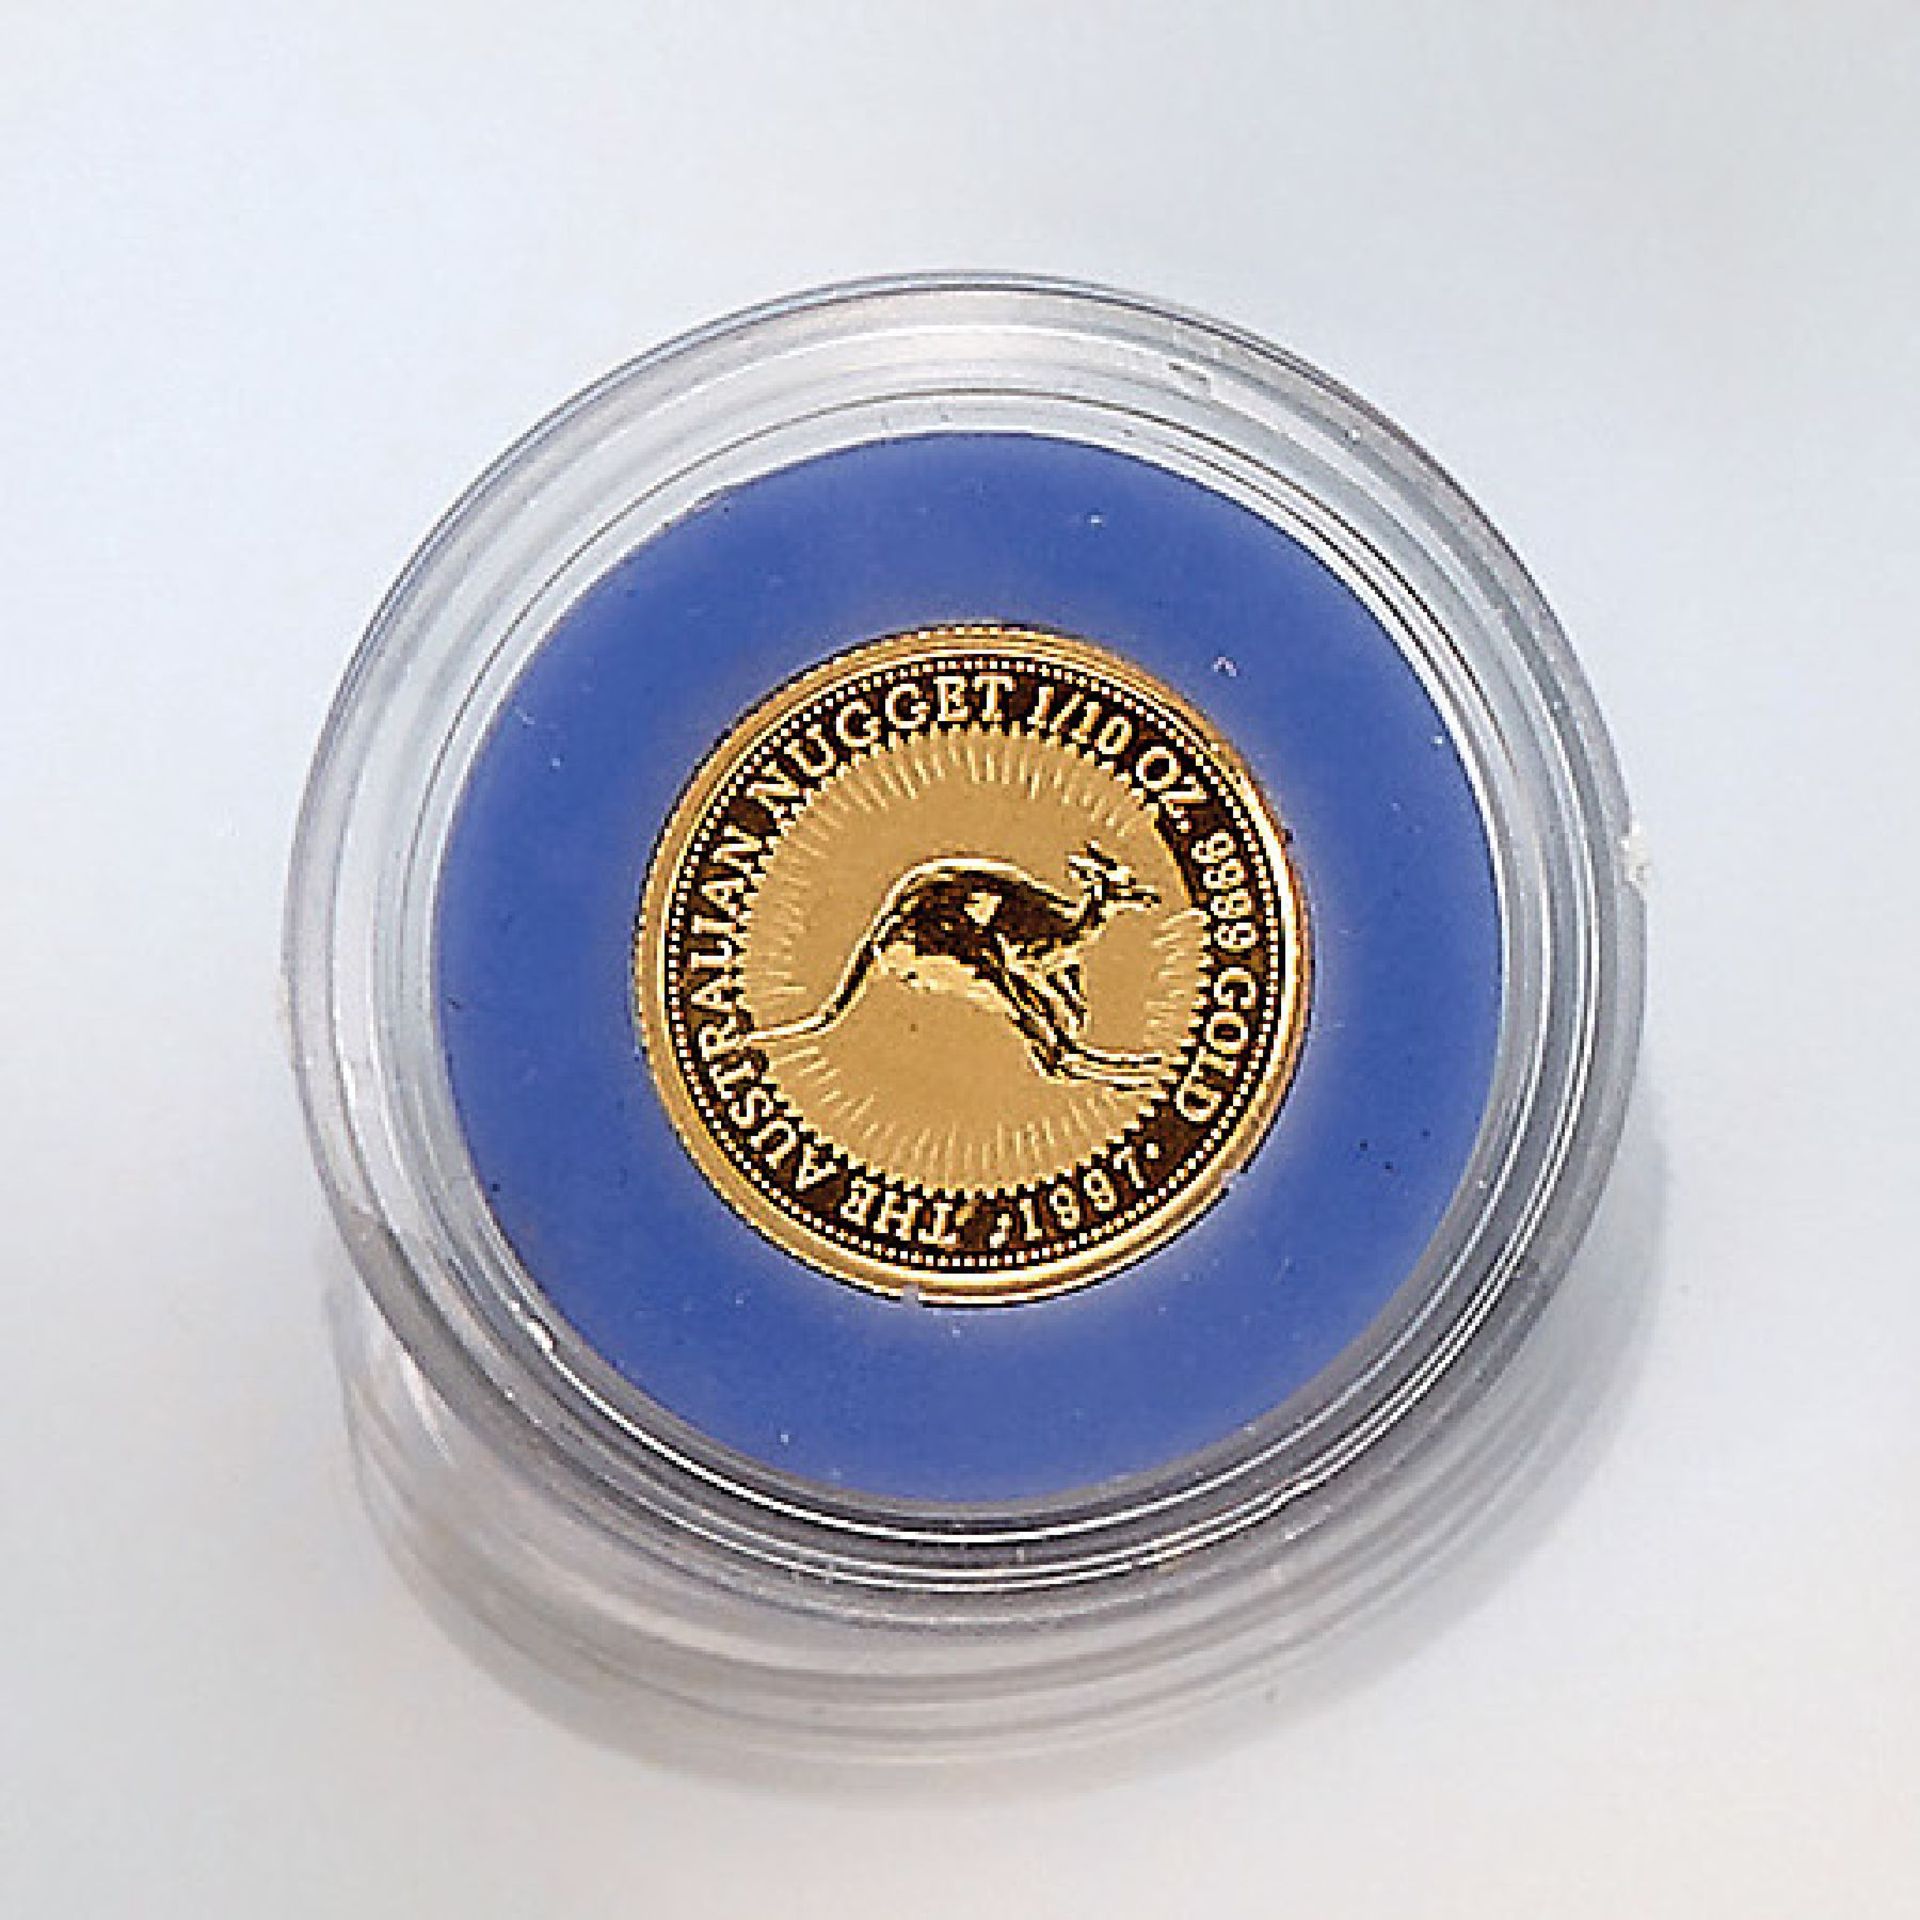 Gold coin, The Australian Nugget, Australia, 1997 , Kangaroo, 1/10 oz, 9999 Gold, orig.